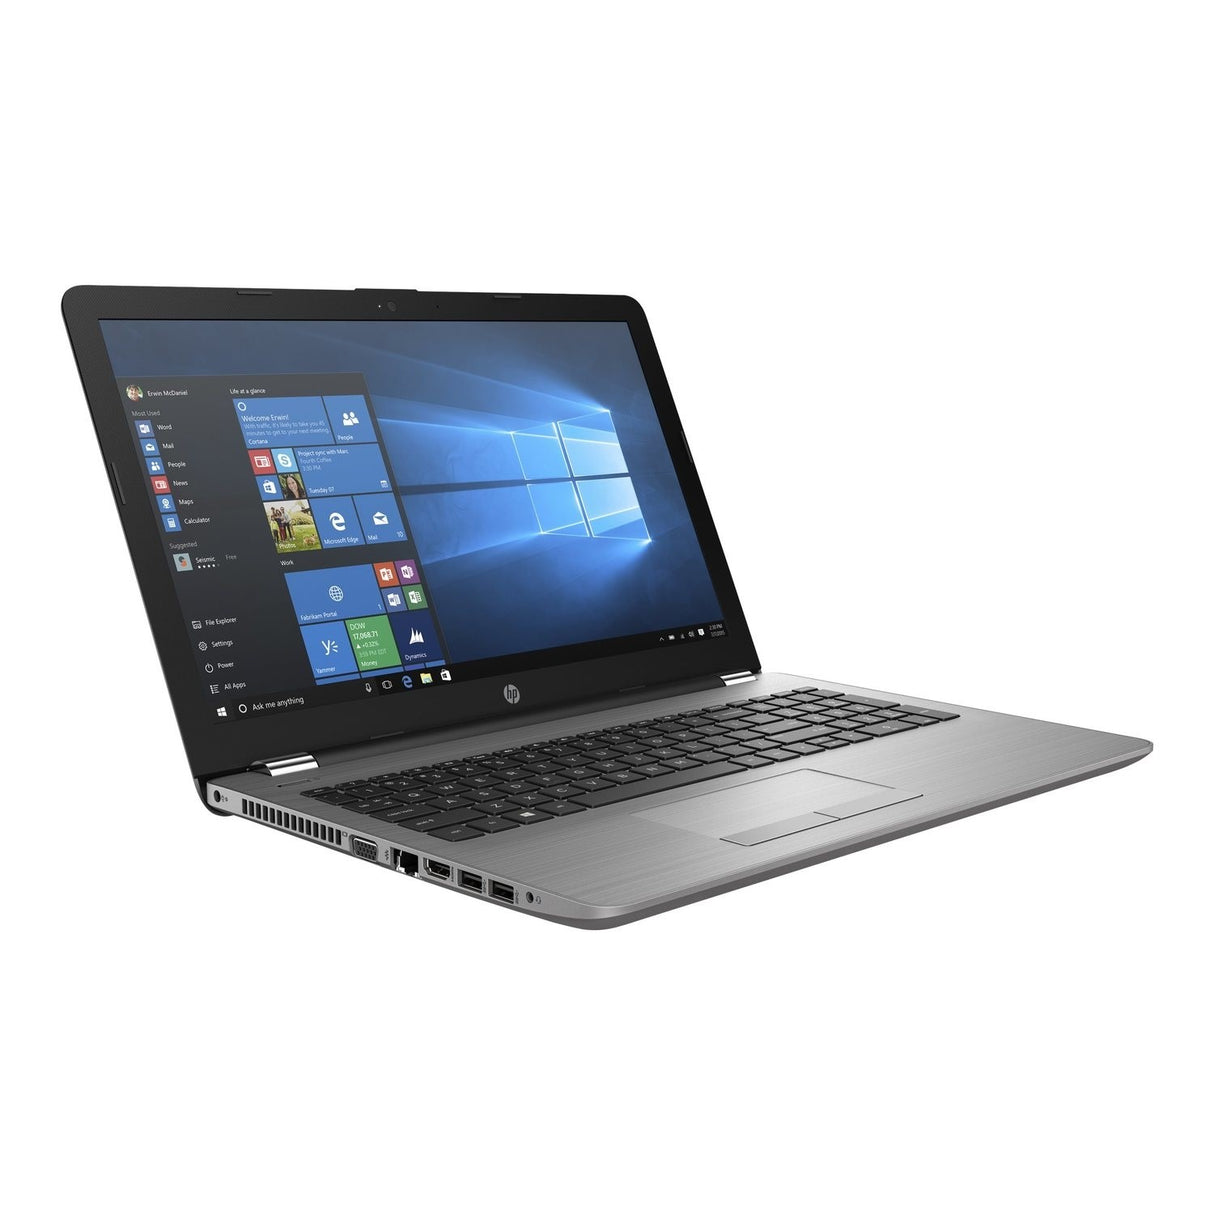 HP EliteBook 250 G6 i5 6th Gen 16GB 256GB SSD Windows 10 Pro